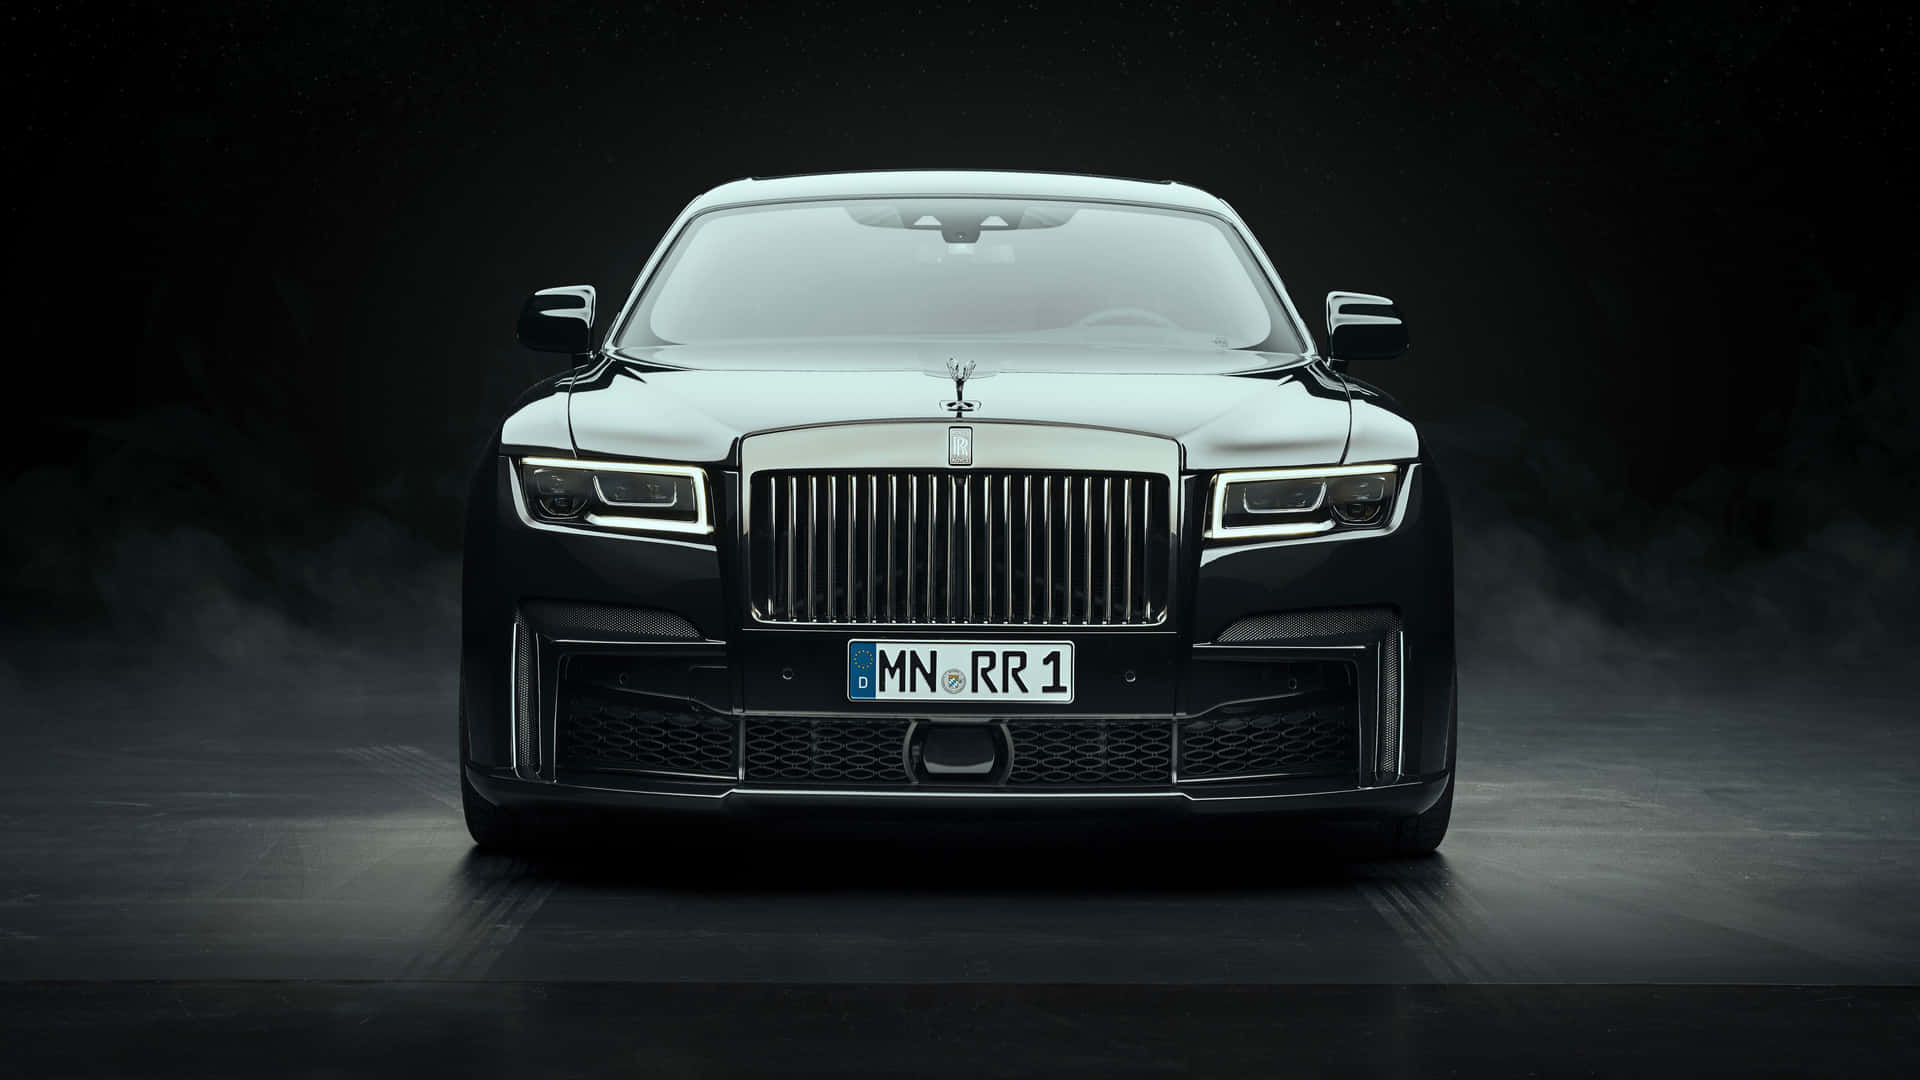 Luxury Rolls-Royce Showcased at Prestigious Event